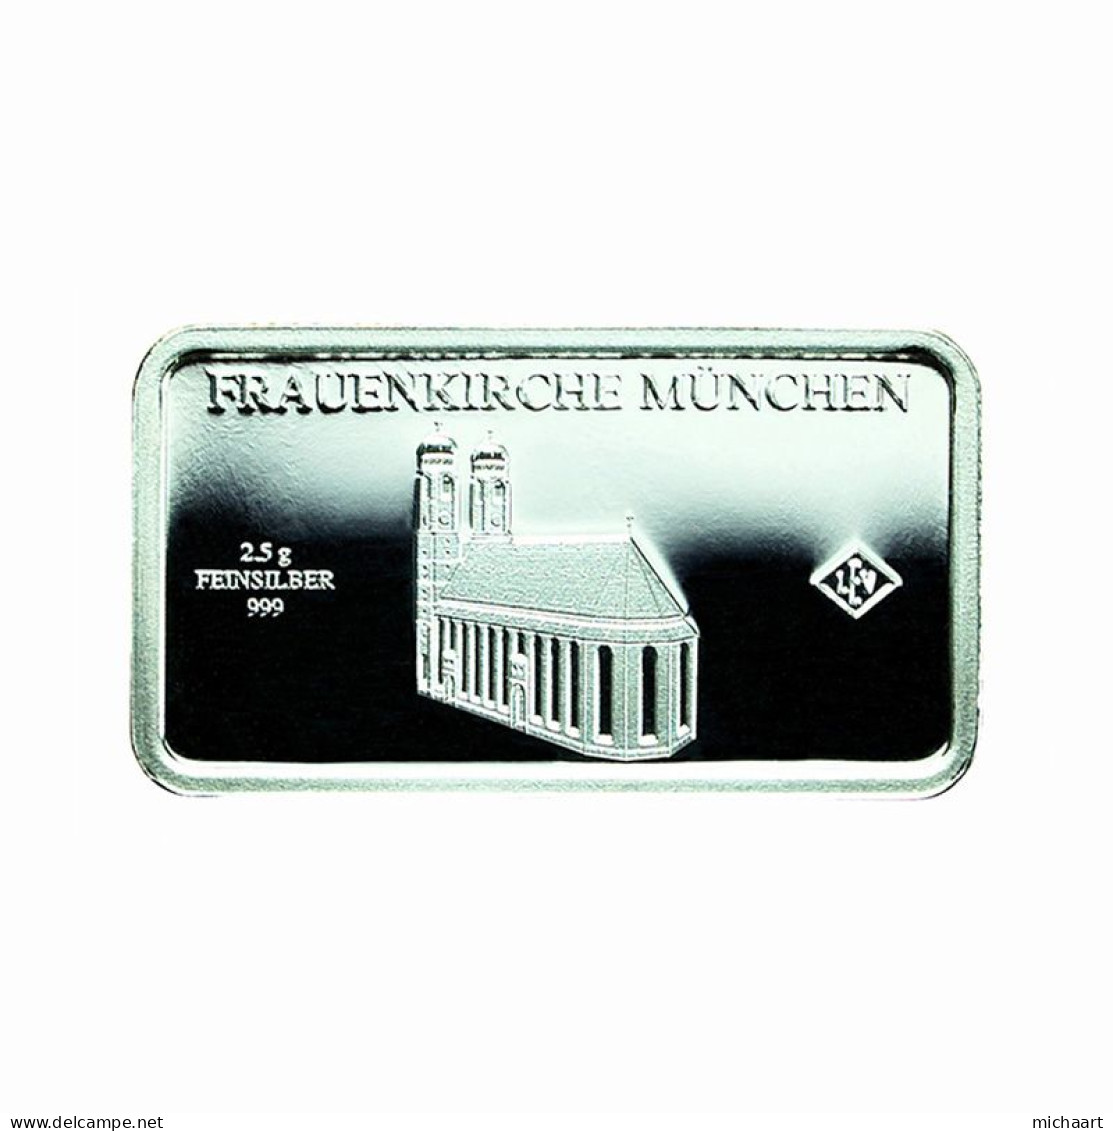 Germany Silver Ingot Bar Proof 2.5g Landmarks Munich Frauenkirche 03850 - Herdenkingsmunt